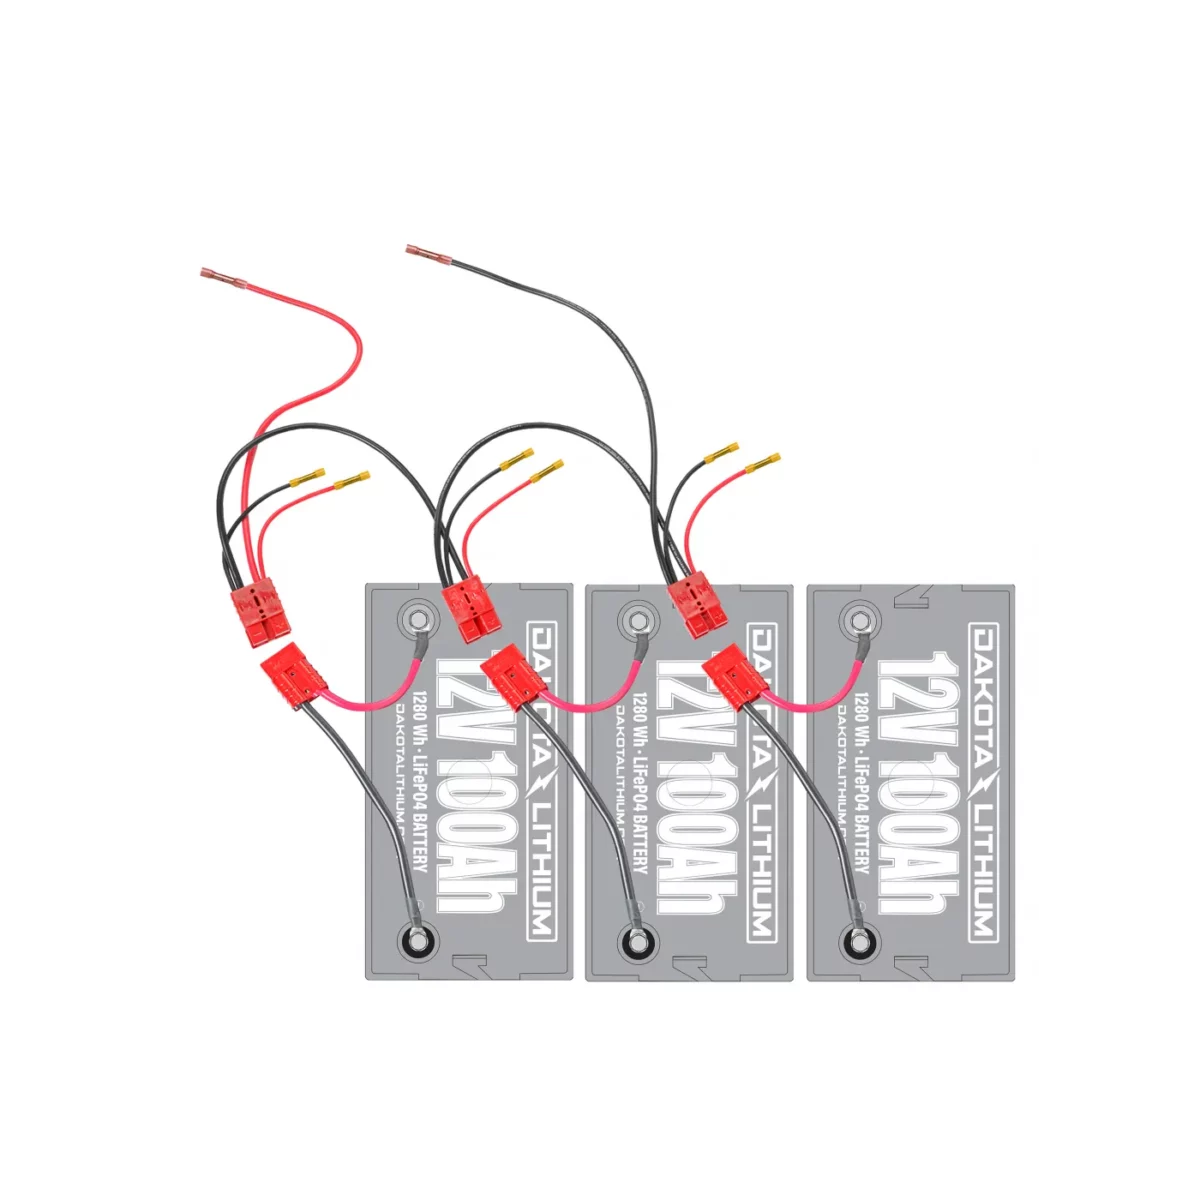 Connect-Ease 36V trolling motor connection kit on dakota lithium batteries